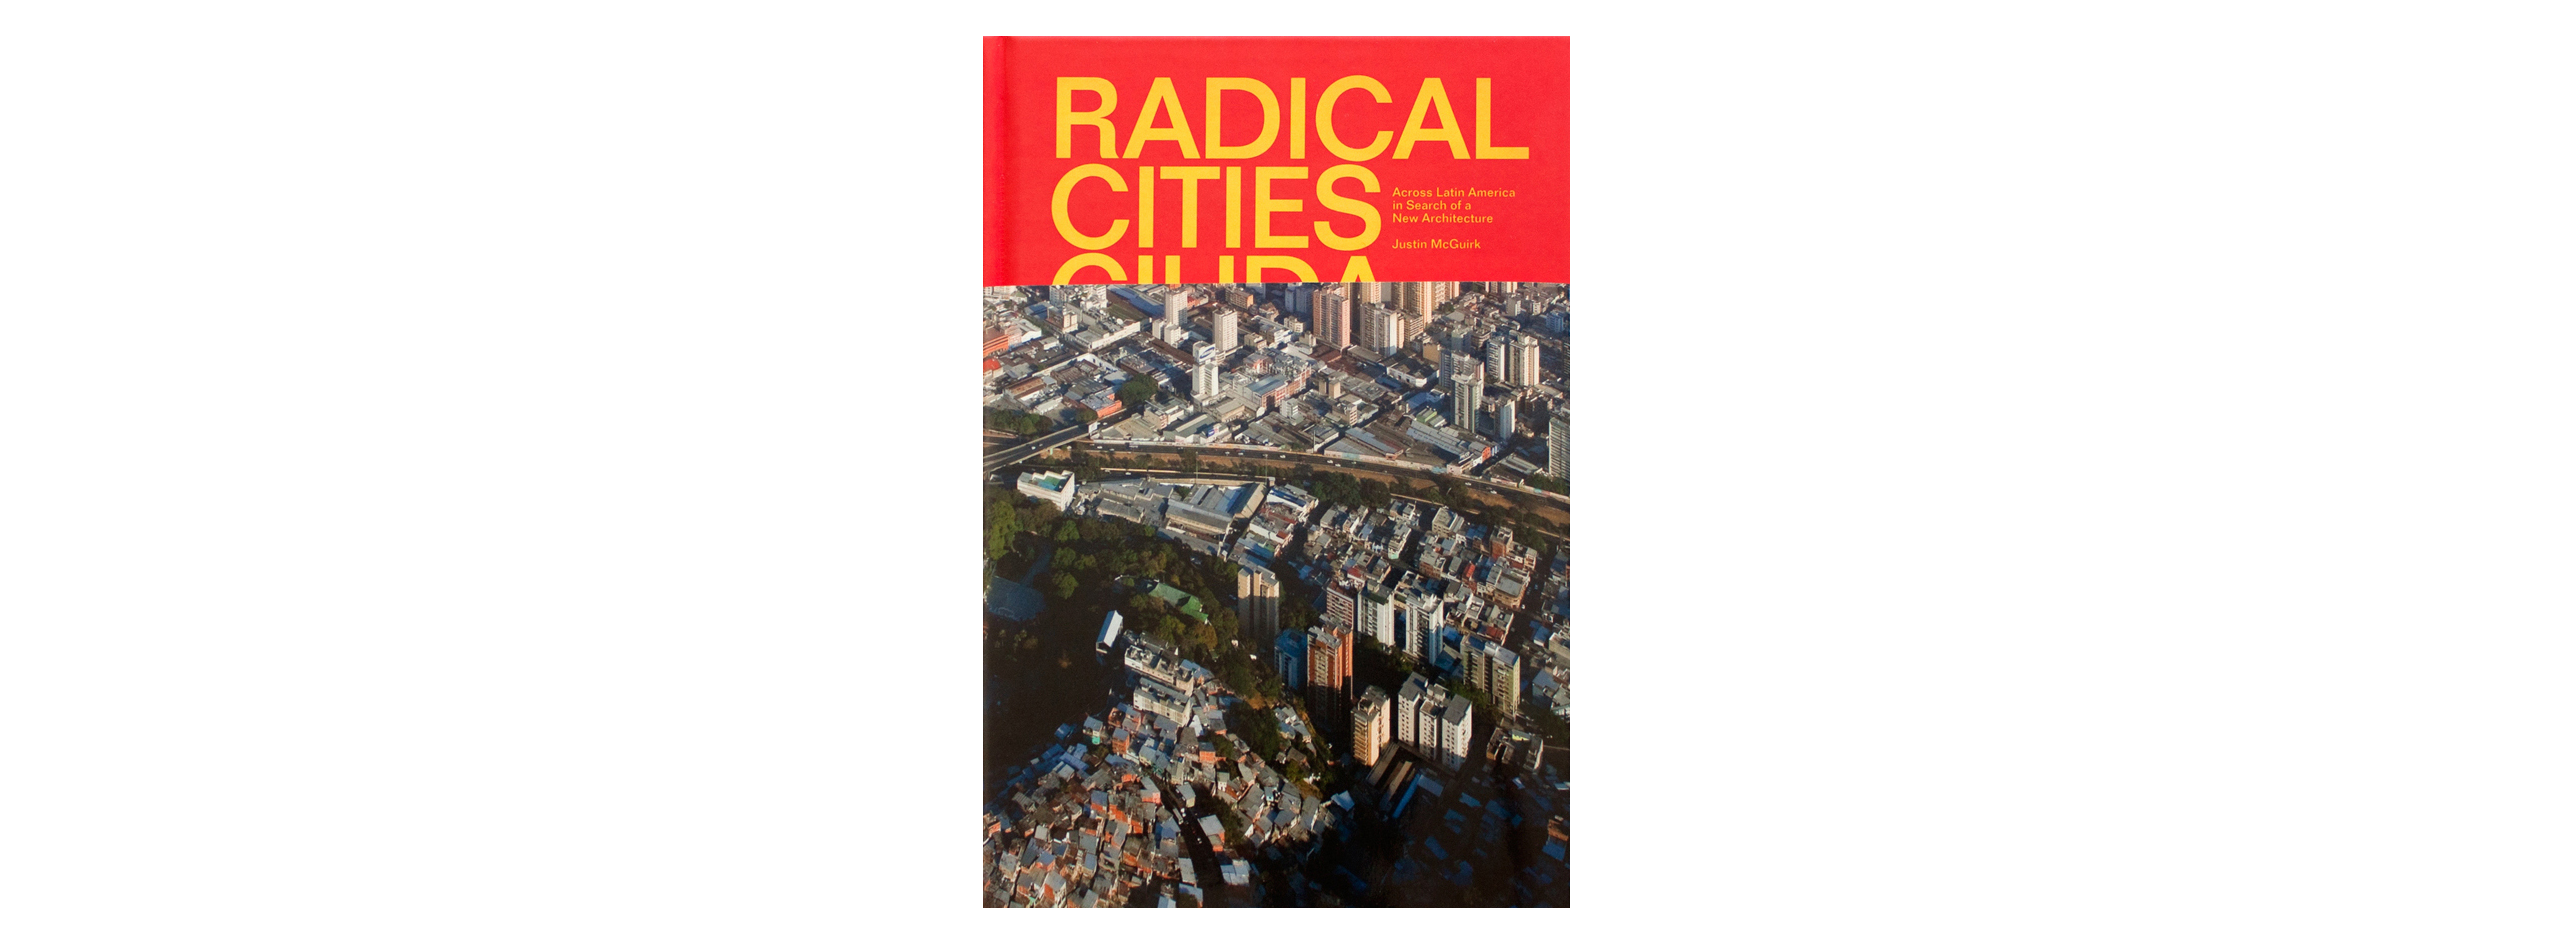 Oculus Quick Take: Radical Cities